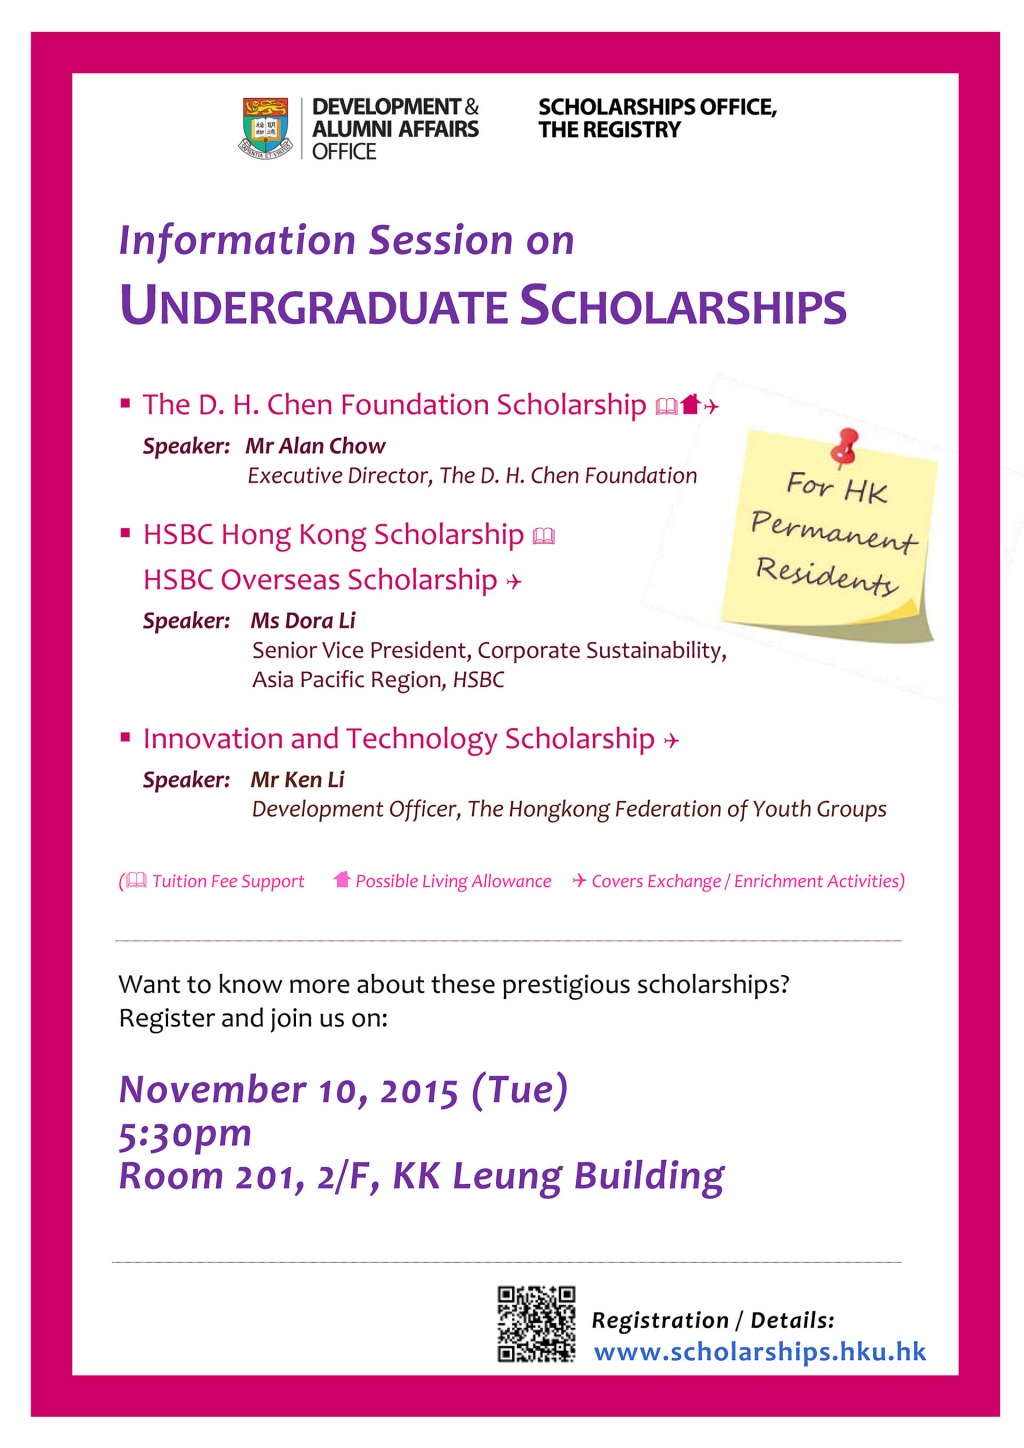 Information Session on Undergraduate Scholarships